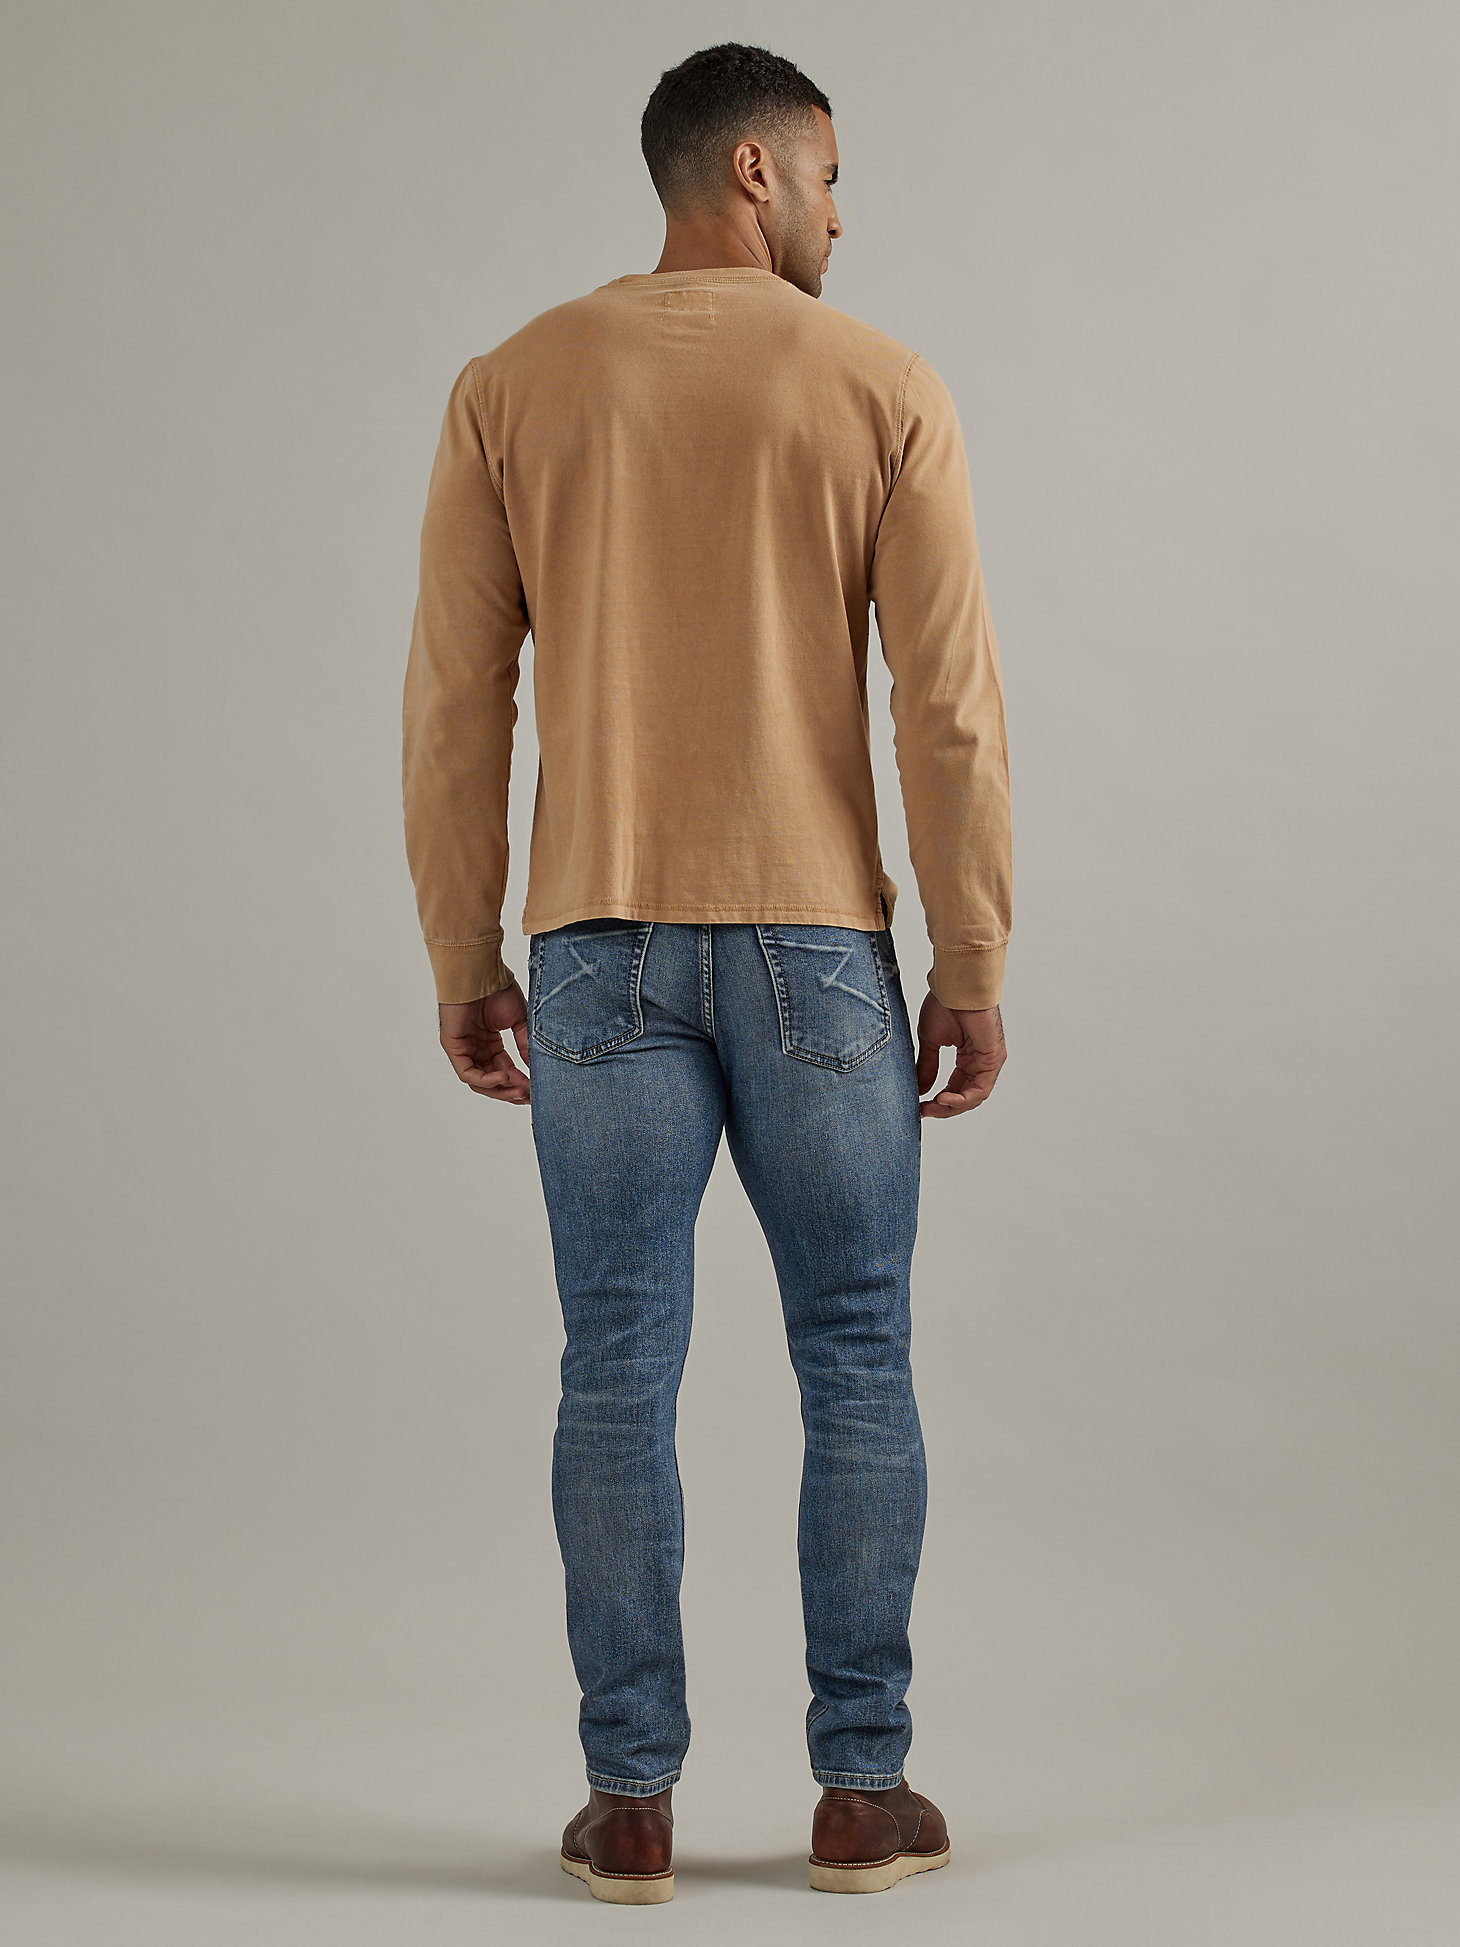 Men's Colburg Slim Fit Straight Jean in Ignition alternative view 1